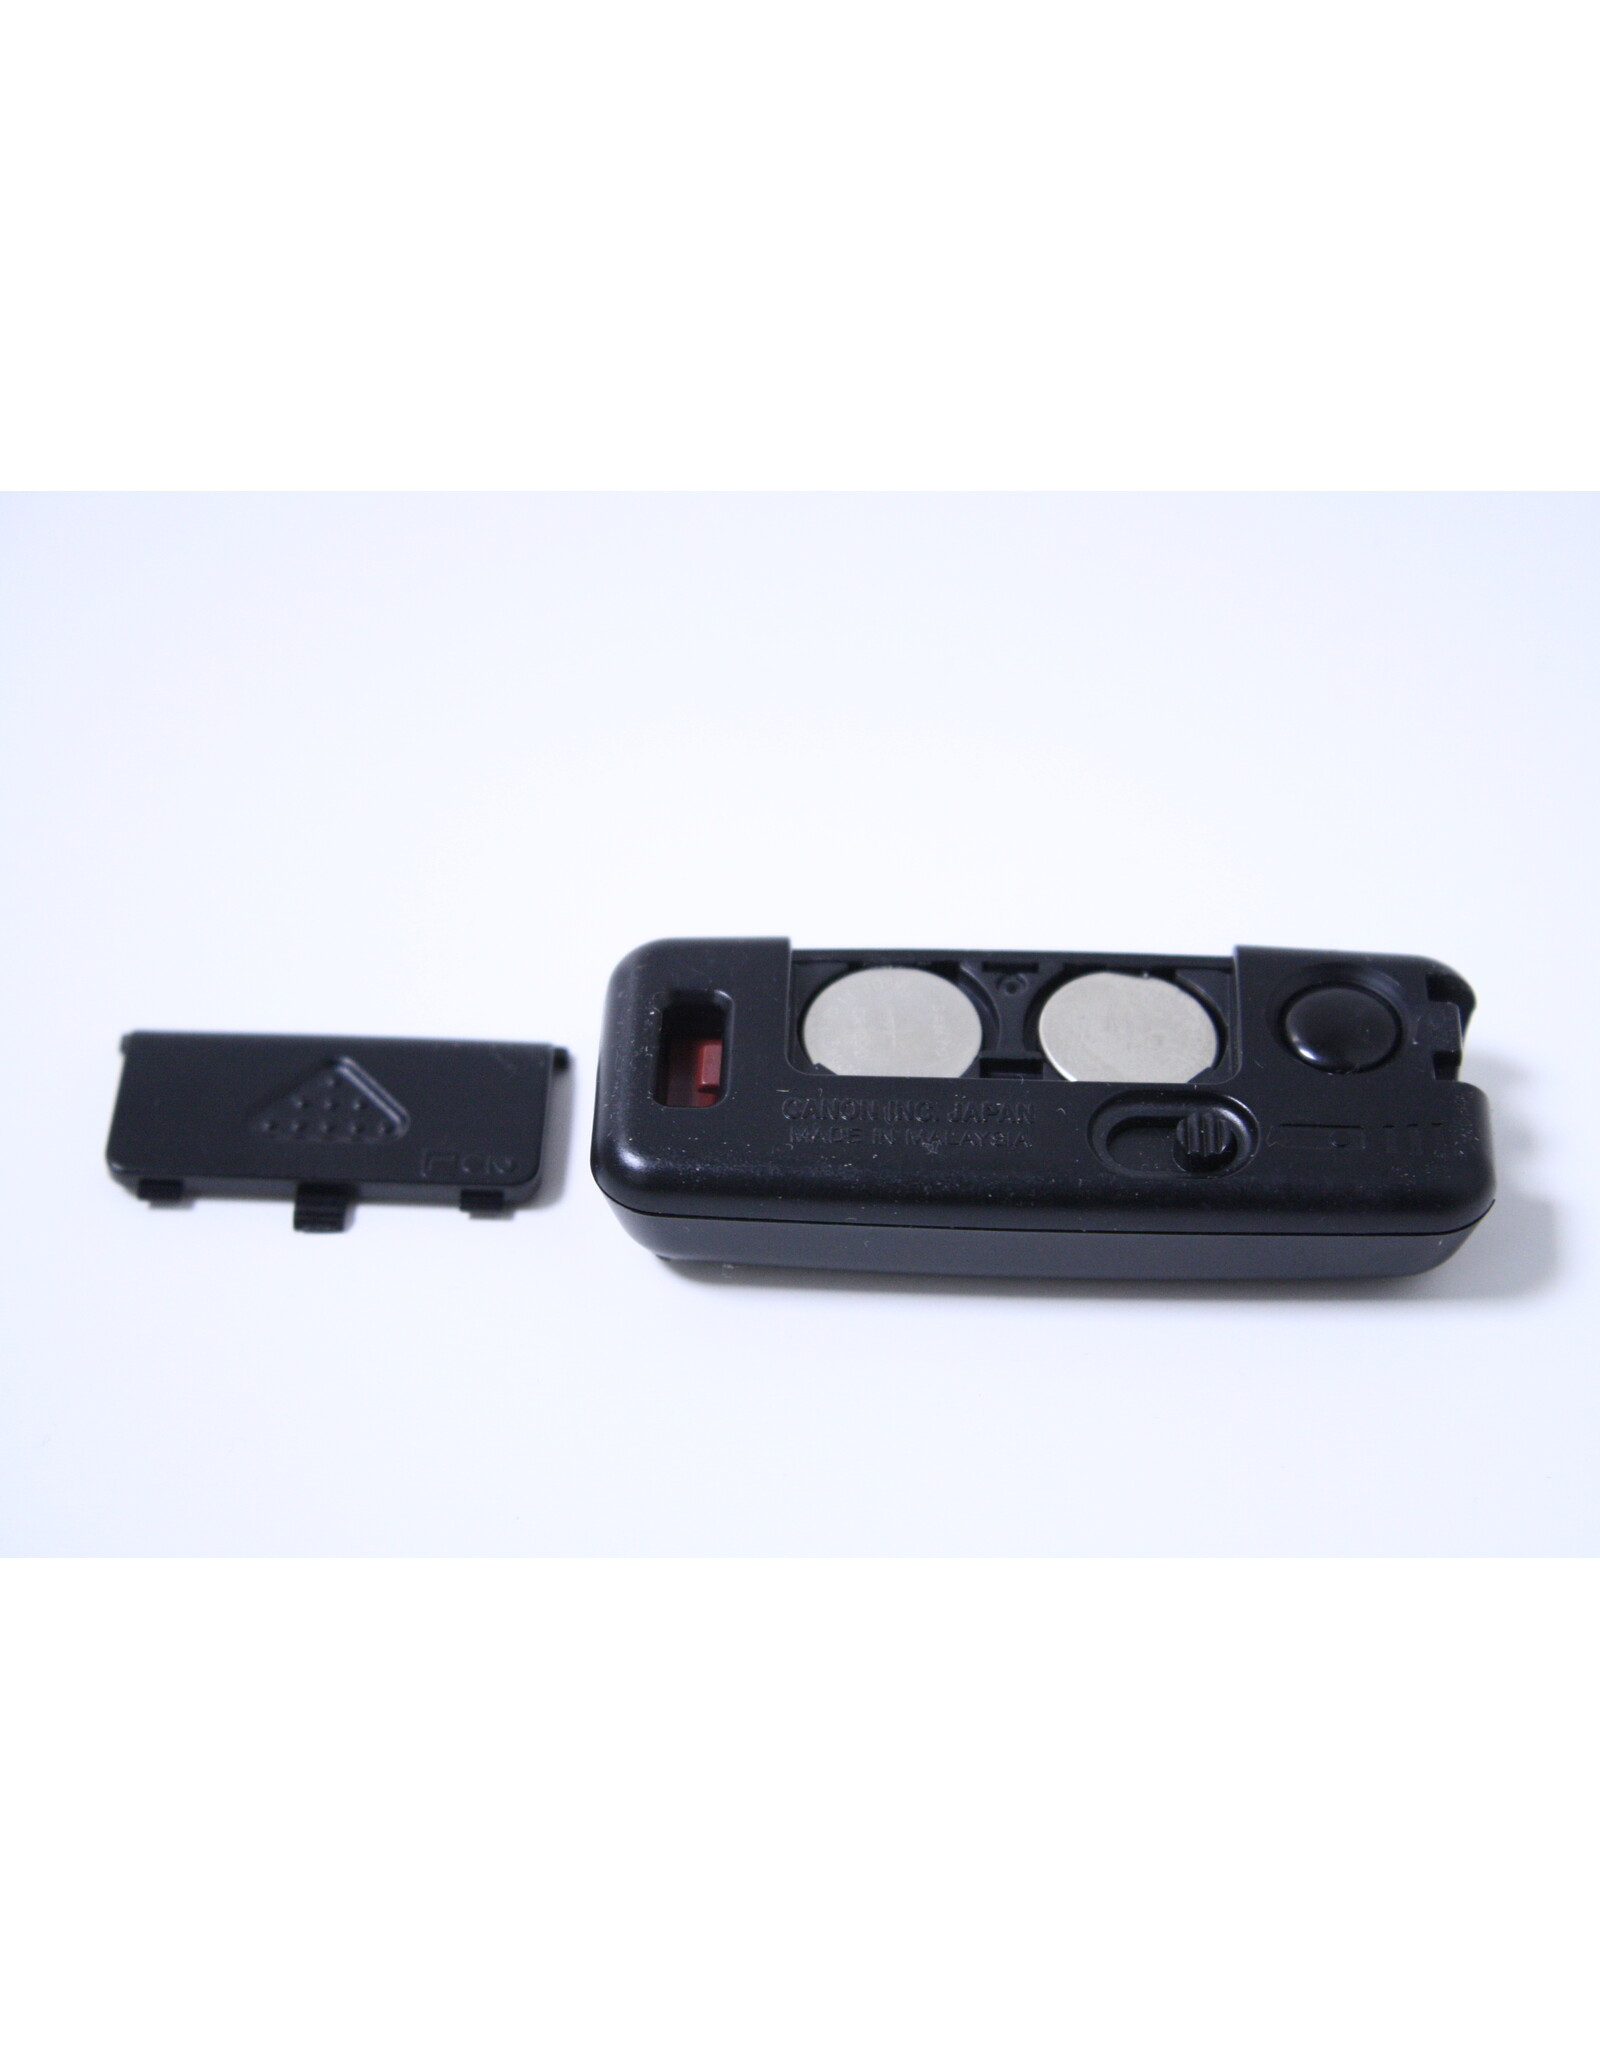 Canon RC-1 Wireless Remote Controller for EOS Elan-II/IIE, Elan-7/7E/7N/7NE, Elan, Rebel Ti (Date Version Only), IX, EOS-10 & Digital Rebel V (Pre-owned)